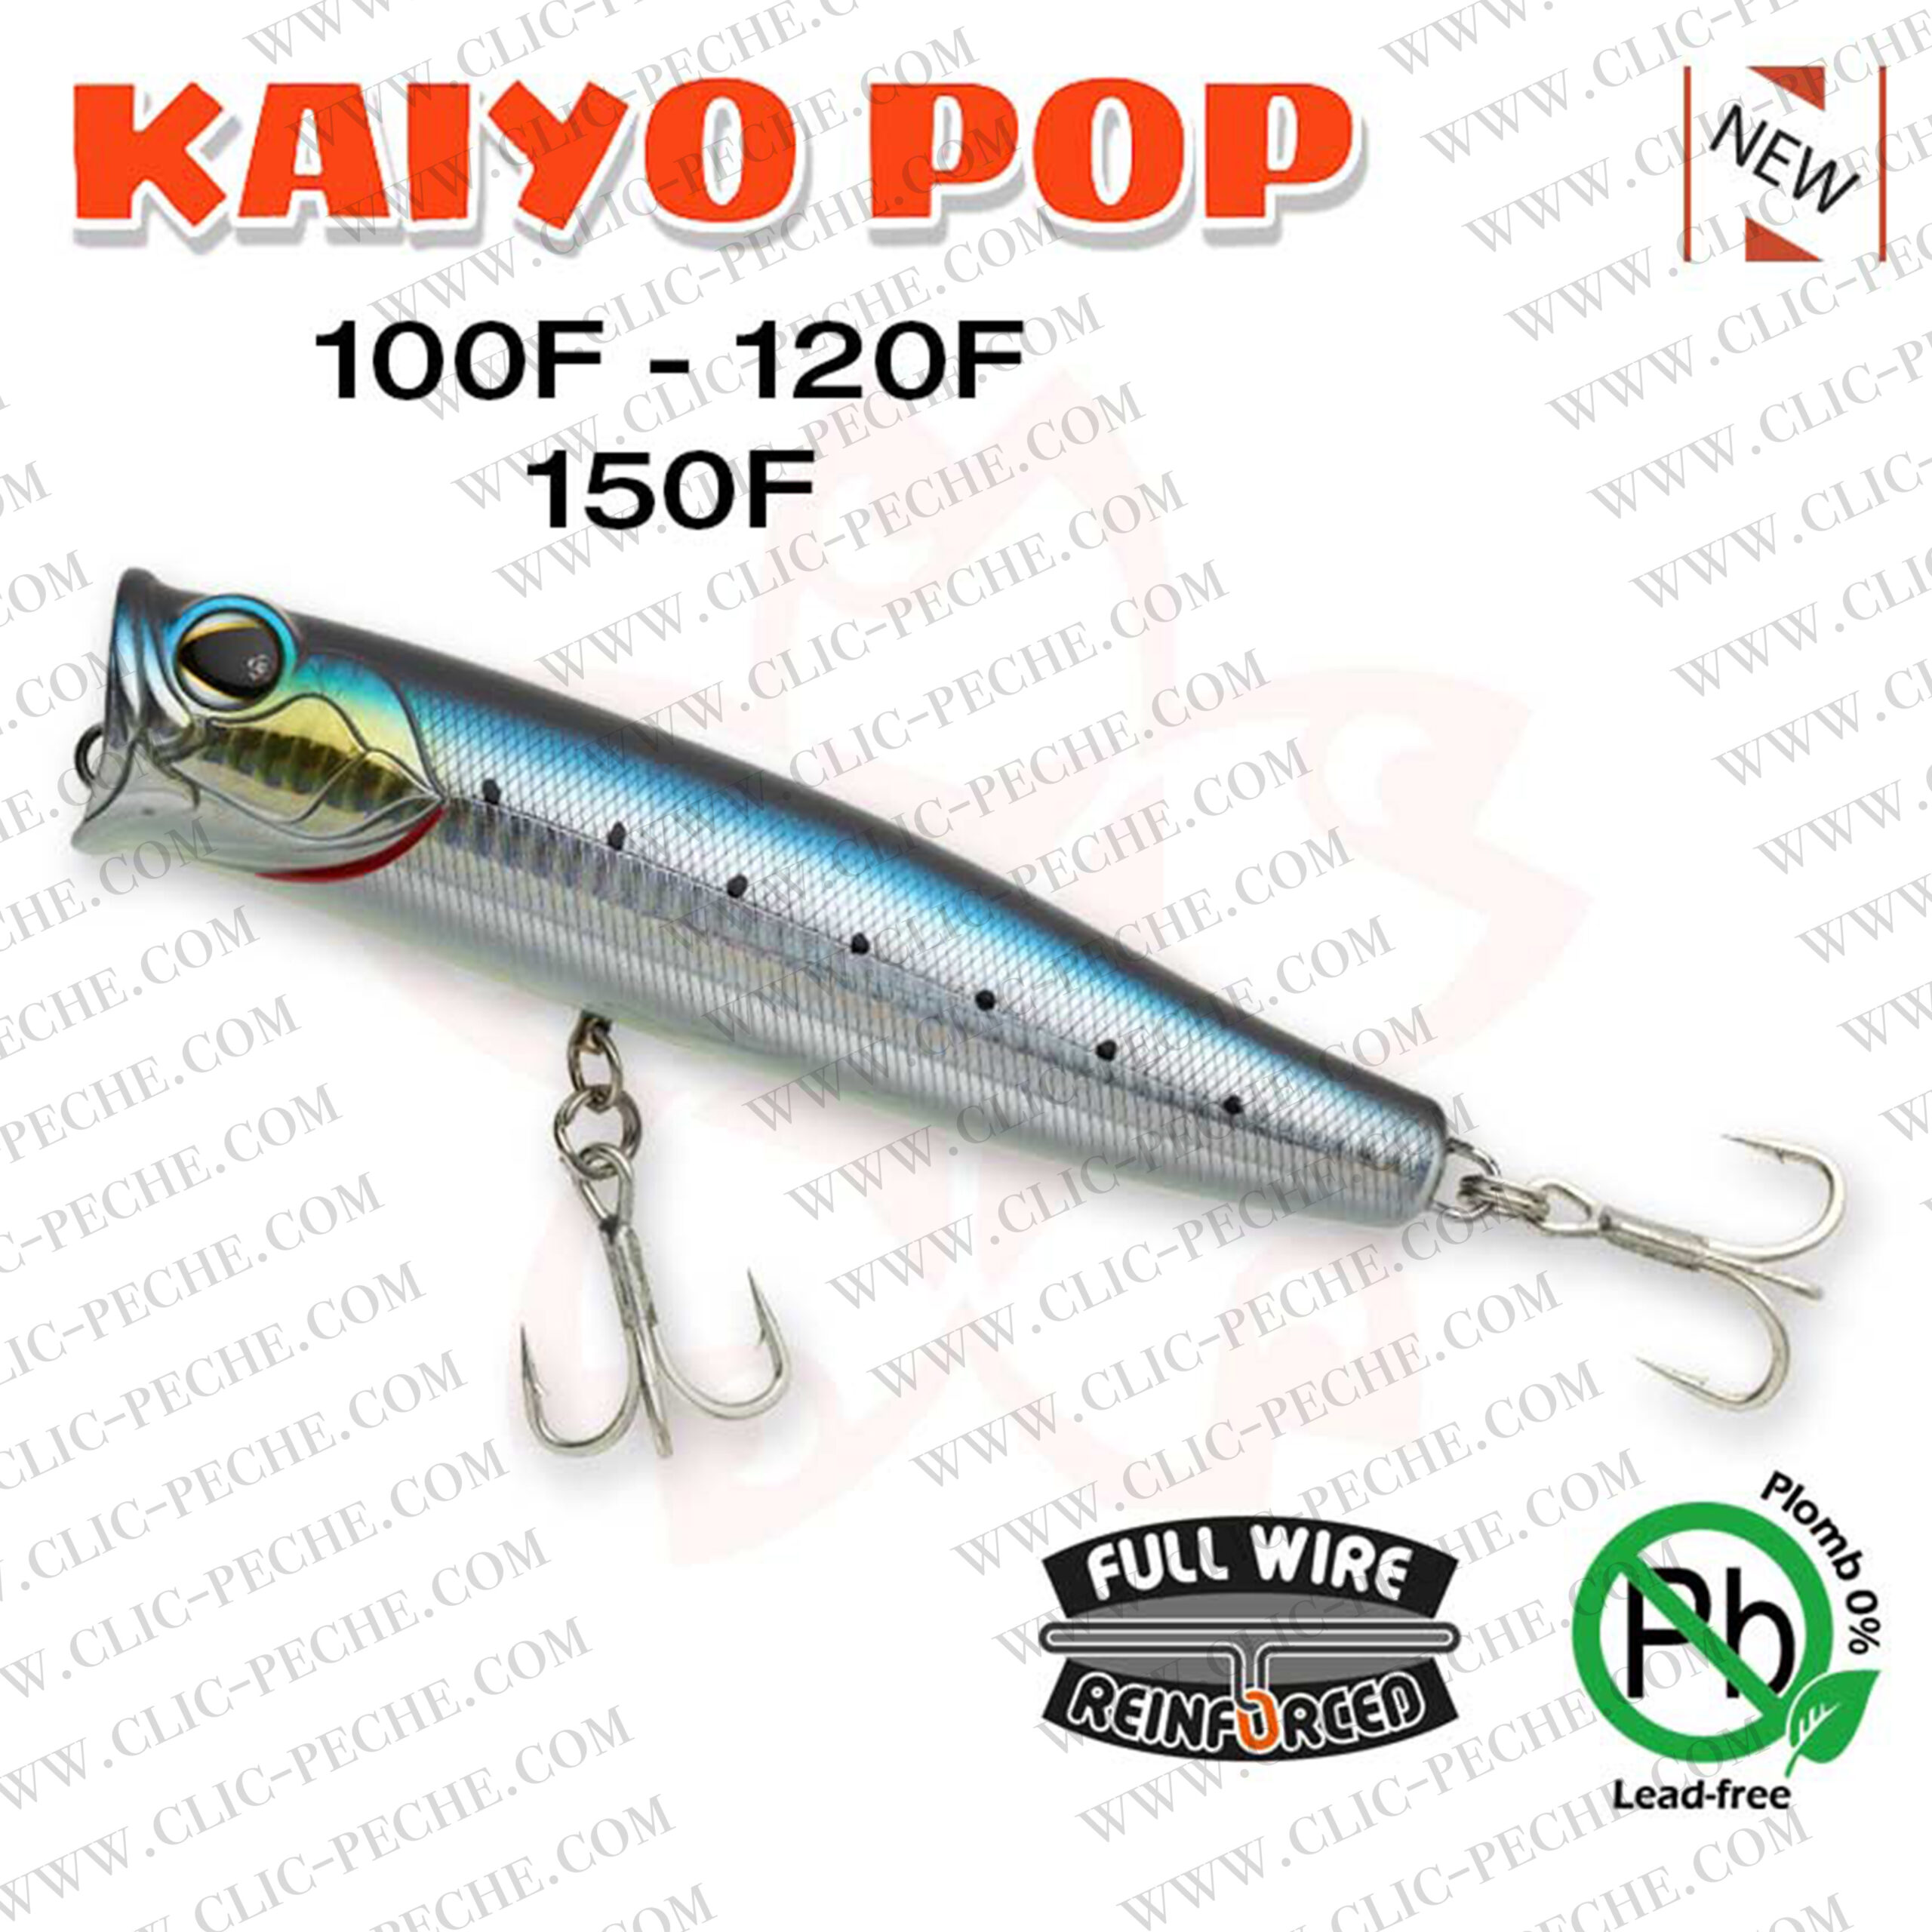 kaiyo pop